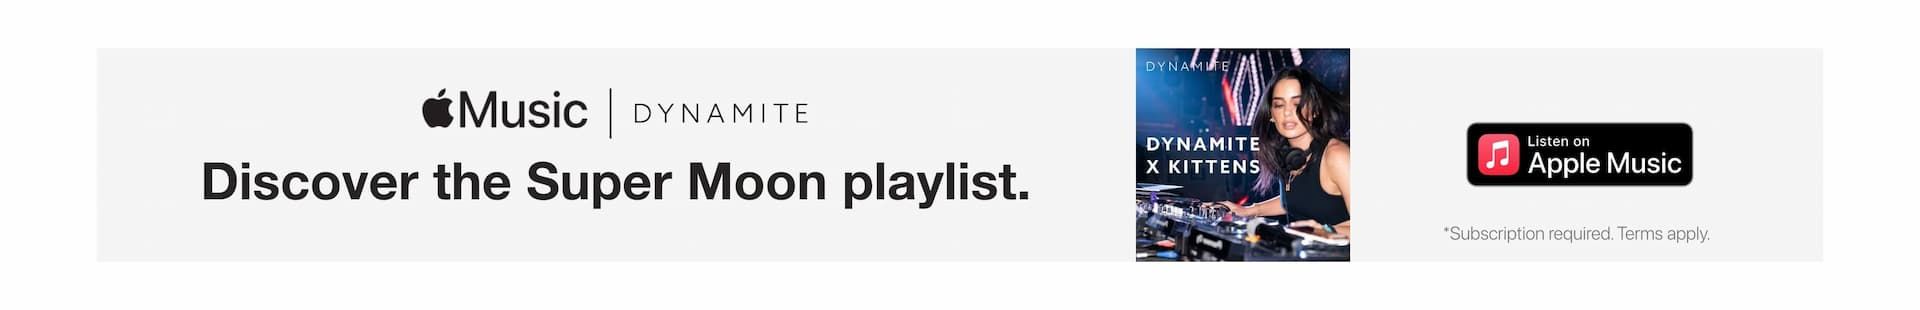 Listen to Dynamite by Kittens Super Moon playlist on Apple Music.